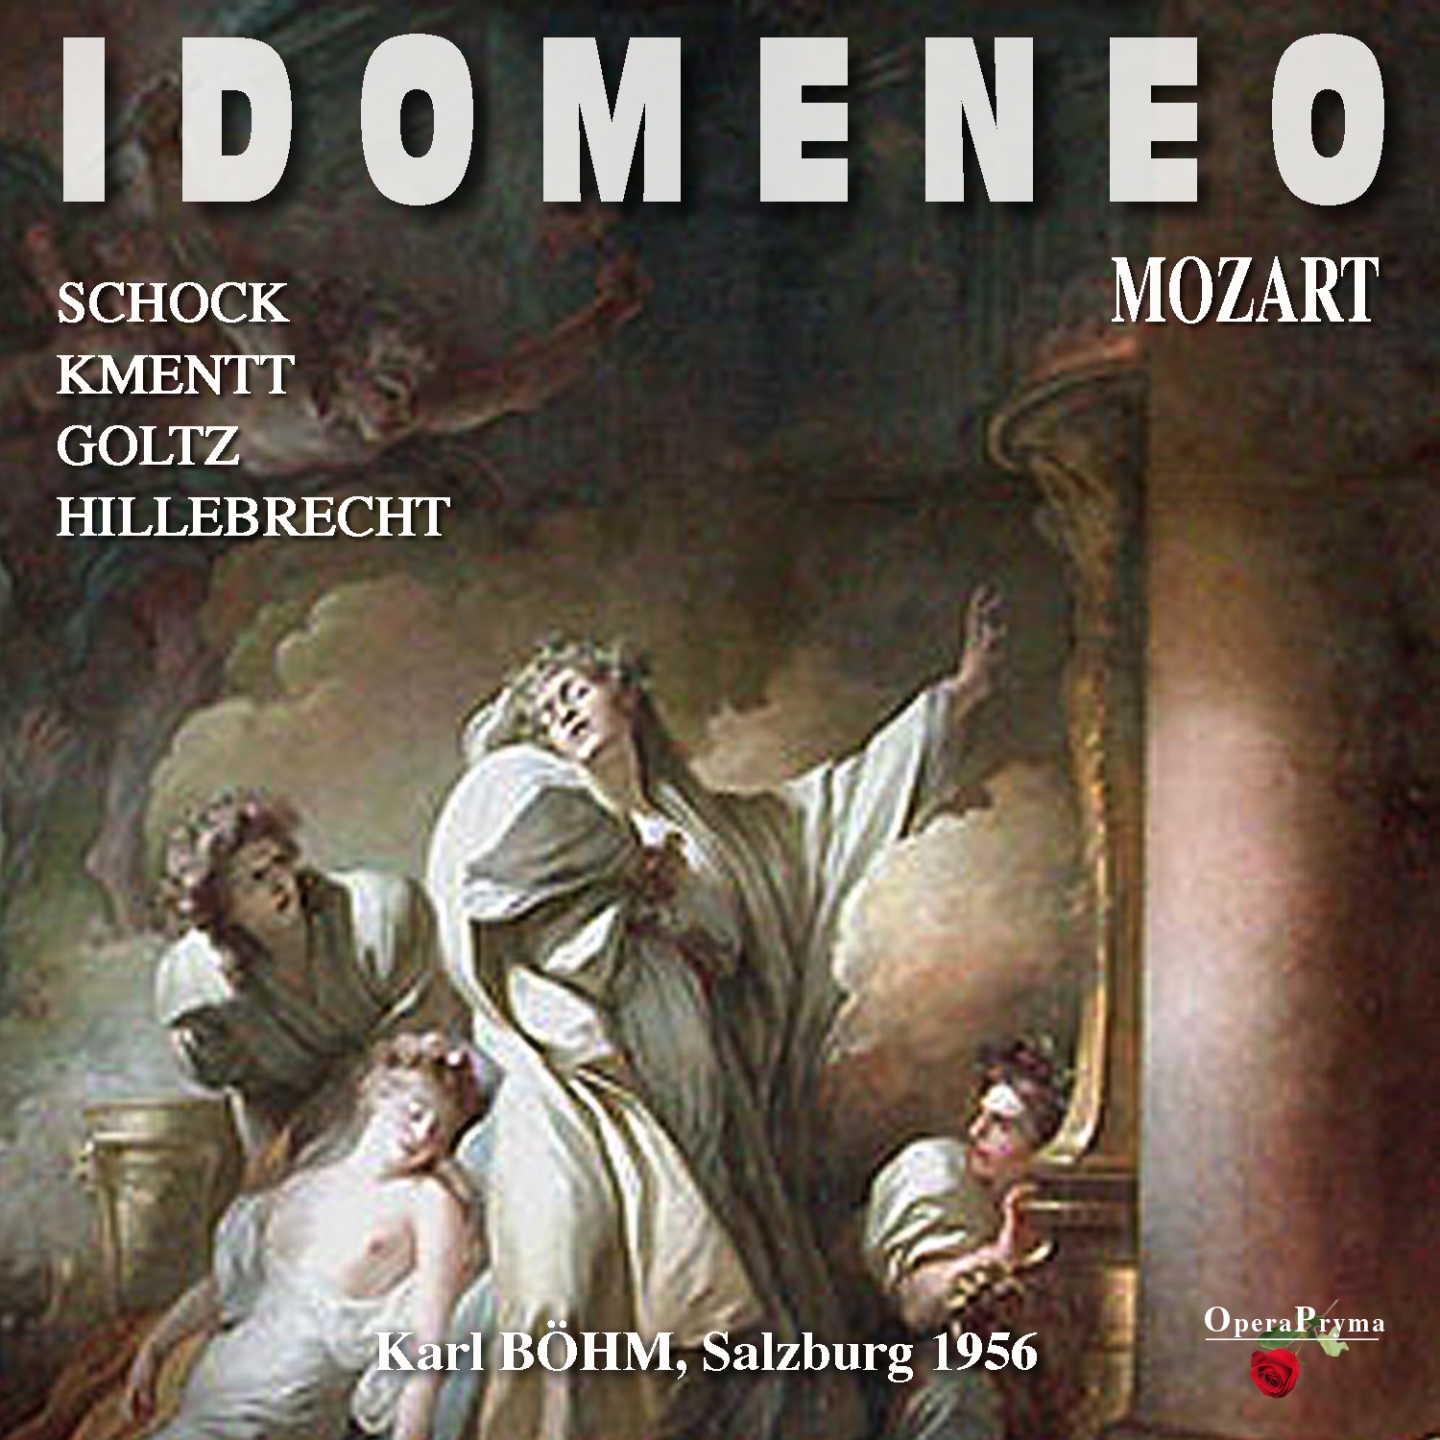 Idomeneo, K. 366, Act II: "Qual nuovo terrore!" (Coro)